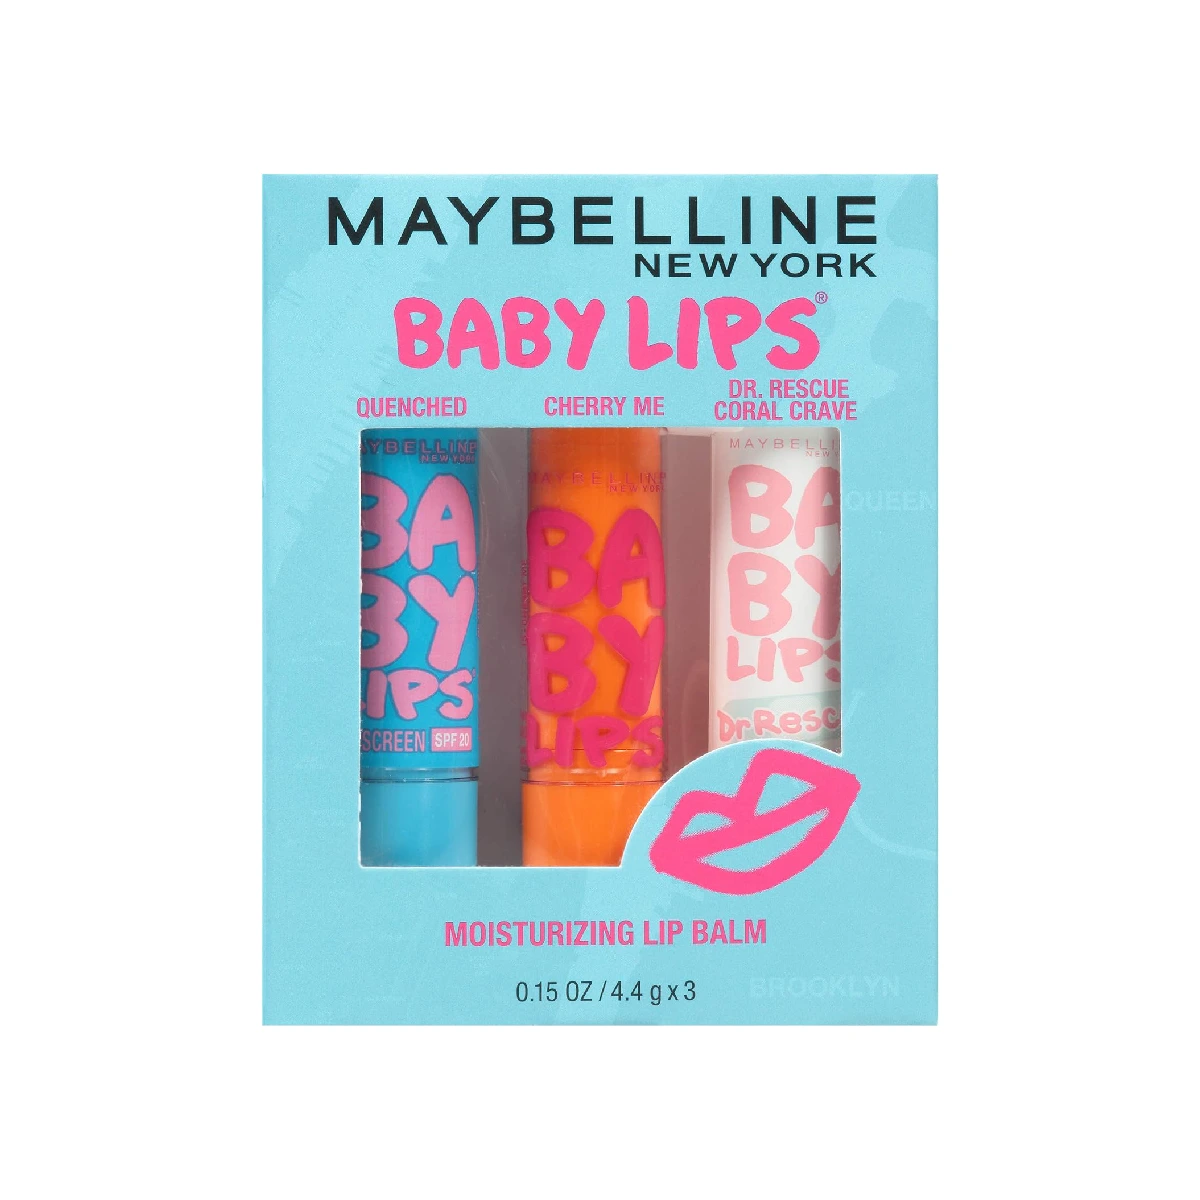 Maybelline New York Baby Lips Moisturizing Lip Balm 3-pack - lip balm trio against a white background.